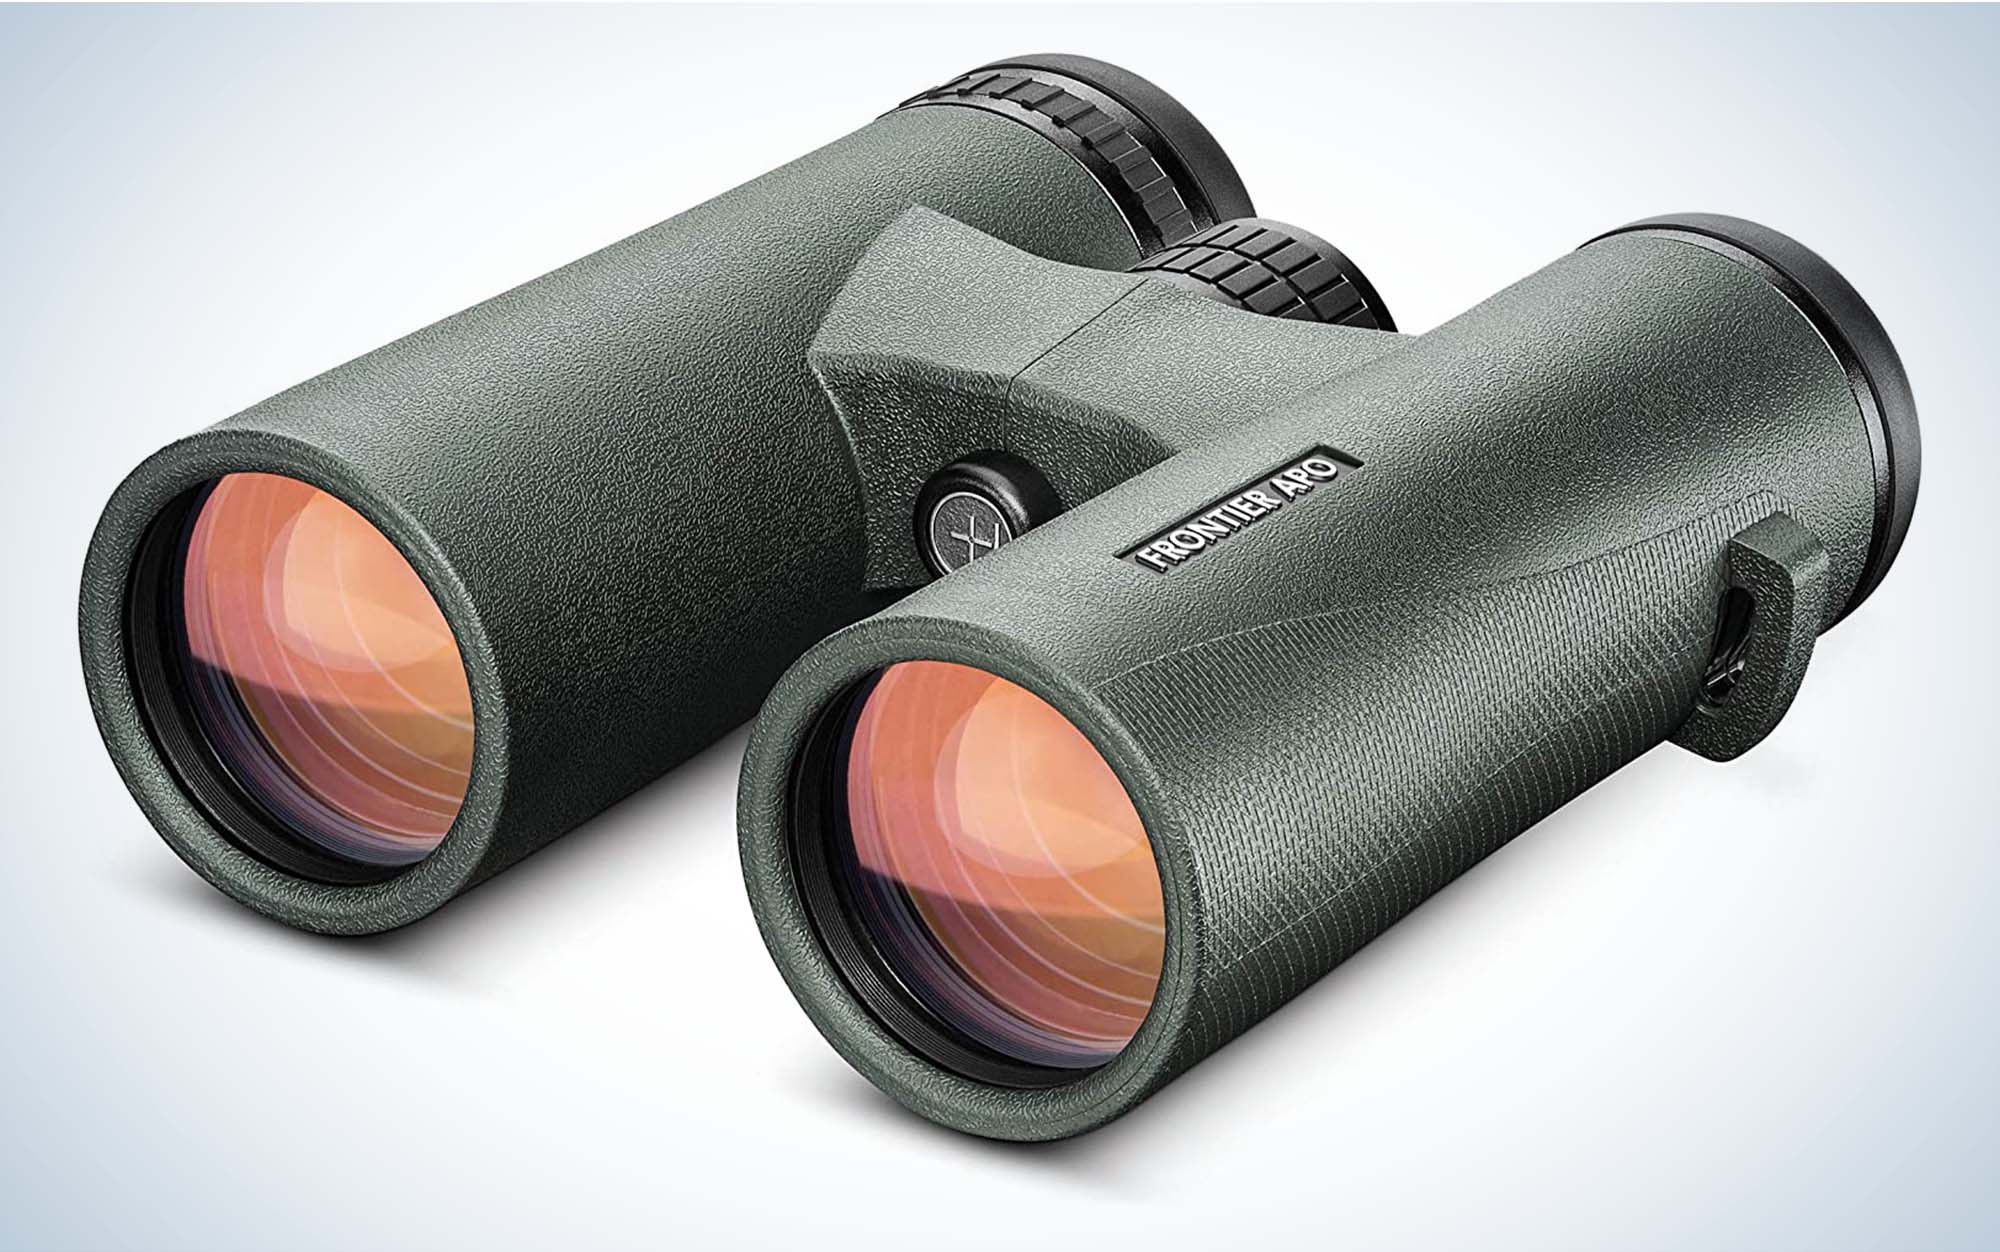 The Hawke Vantage 8x42Â are the best budget binoculars.